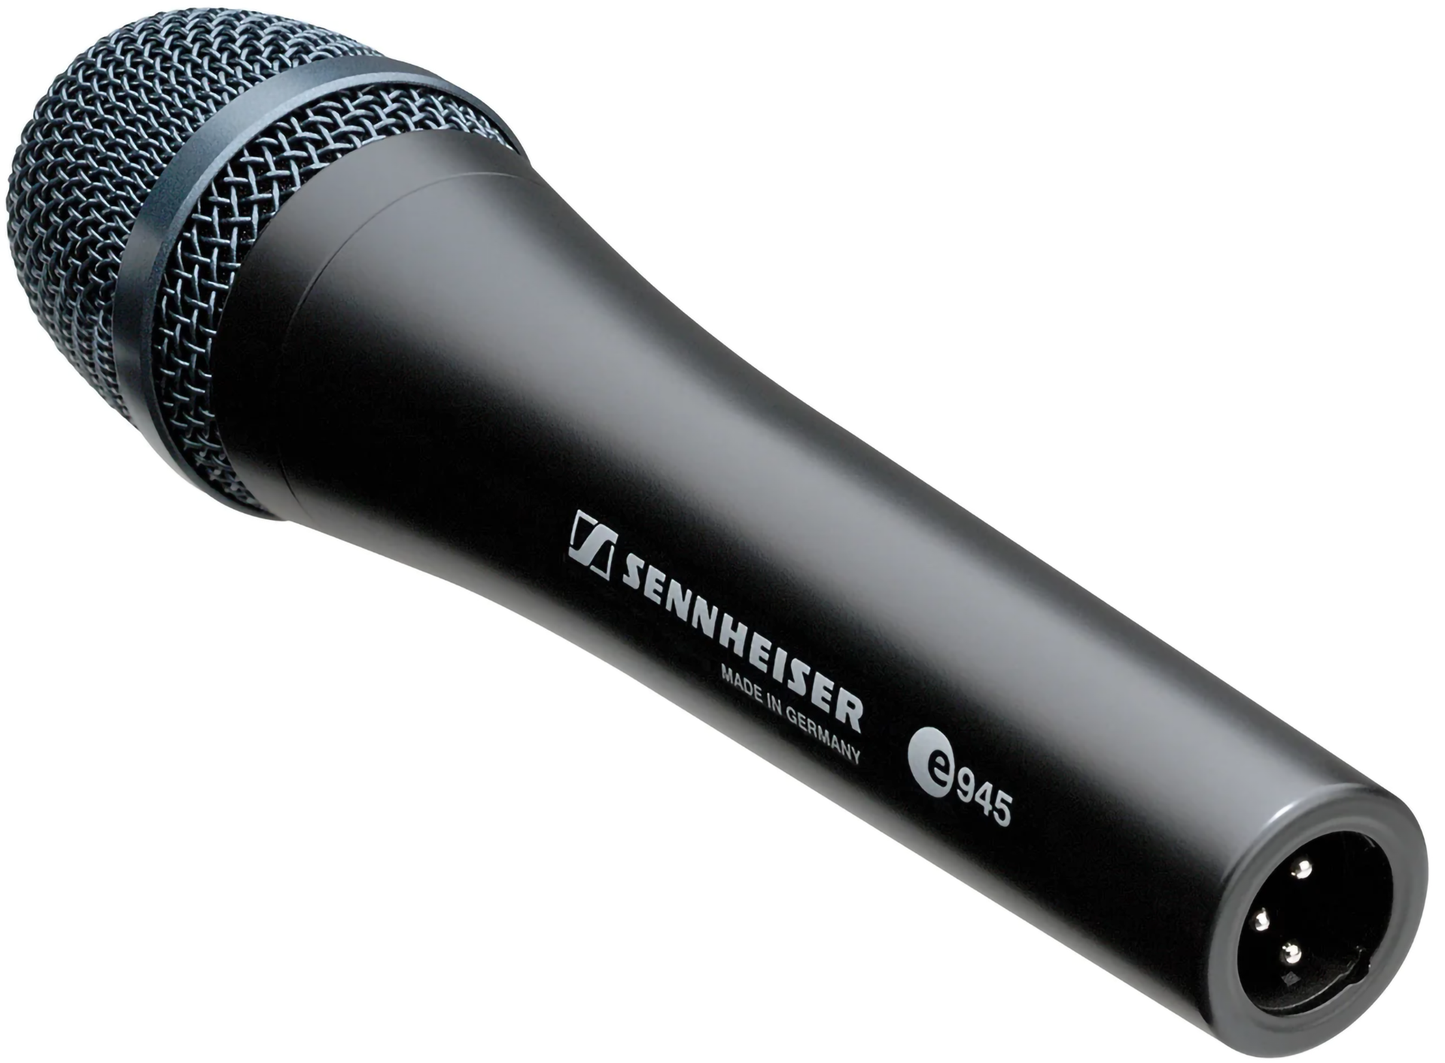 Sennheiser e945 Supercardioid Dynamic Microphone